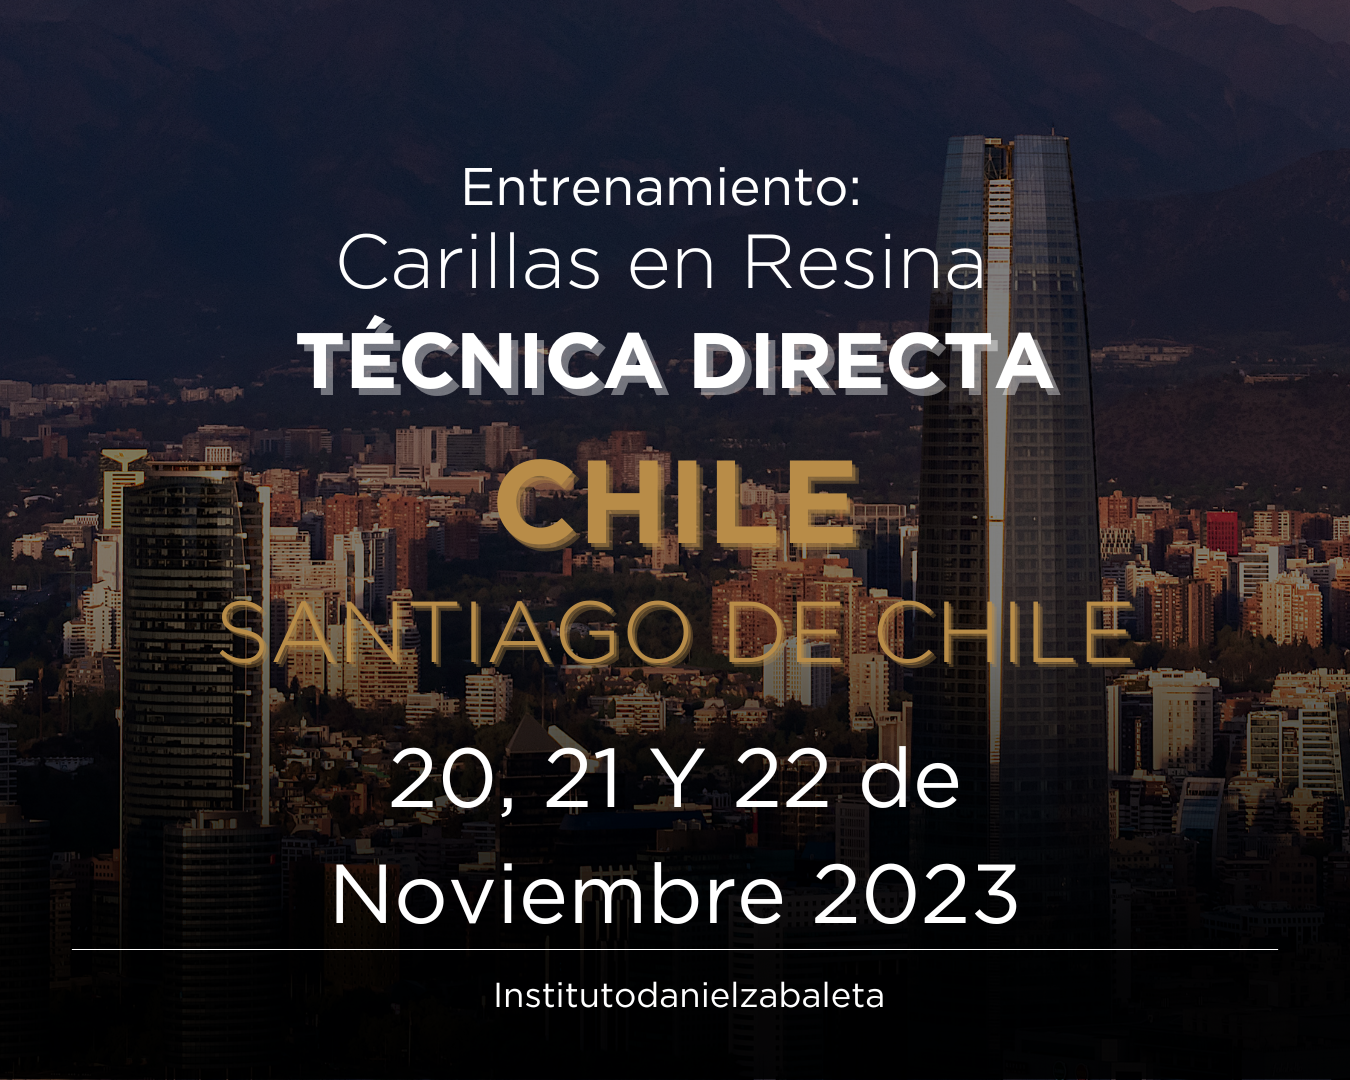 Website Entrenamiento Chile resina(1350 × 1080 px)